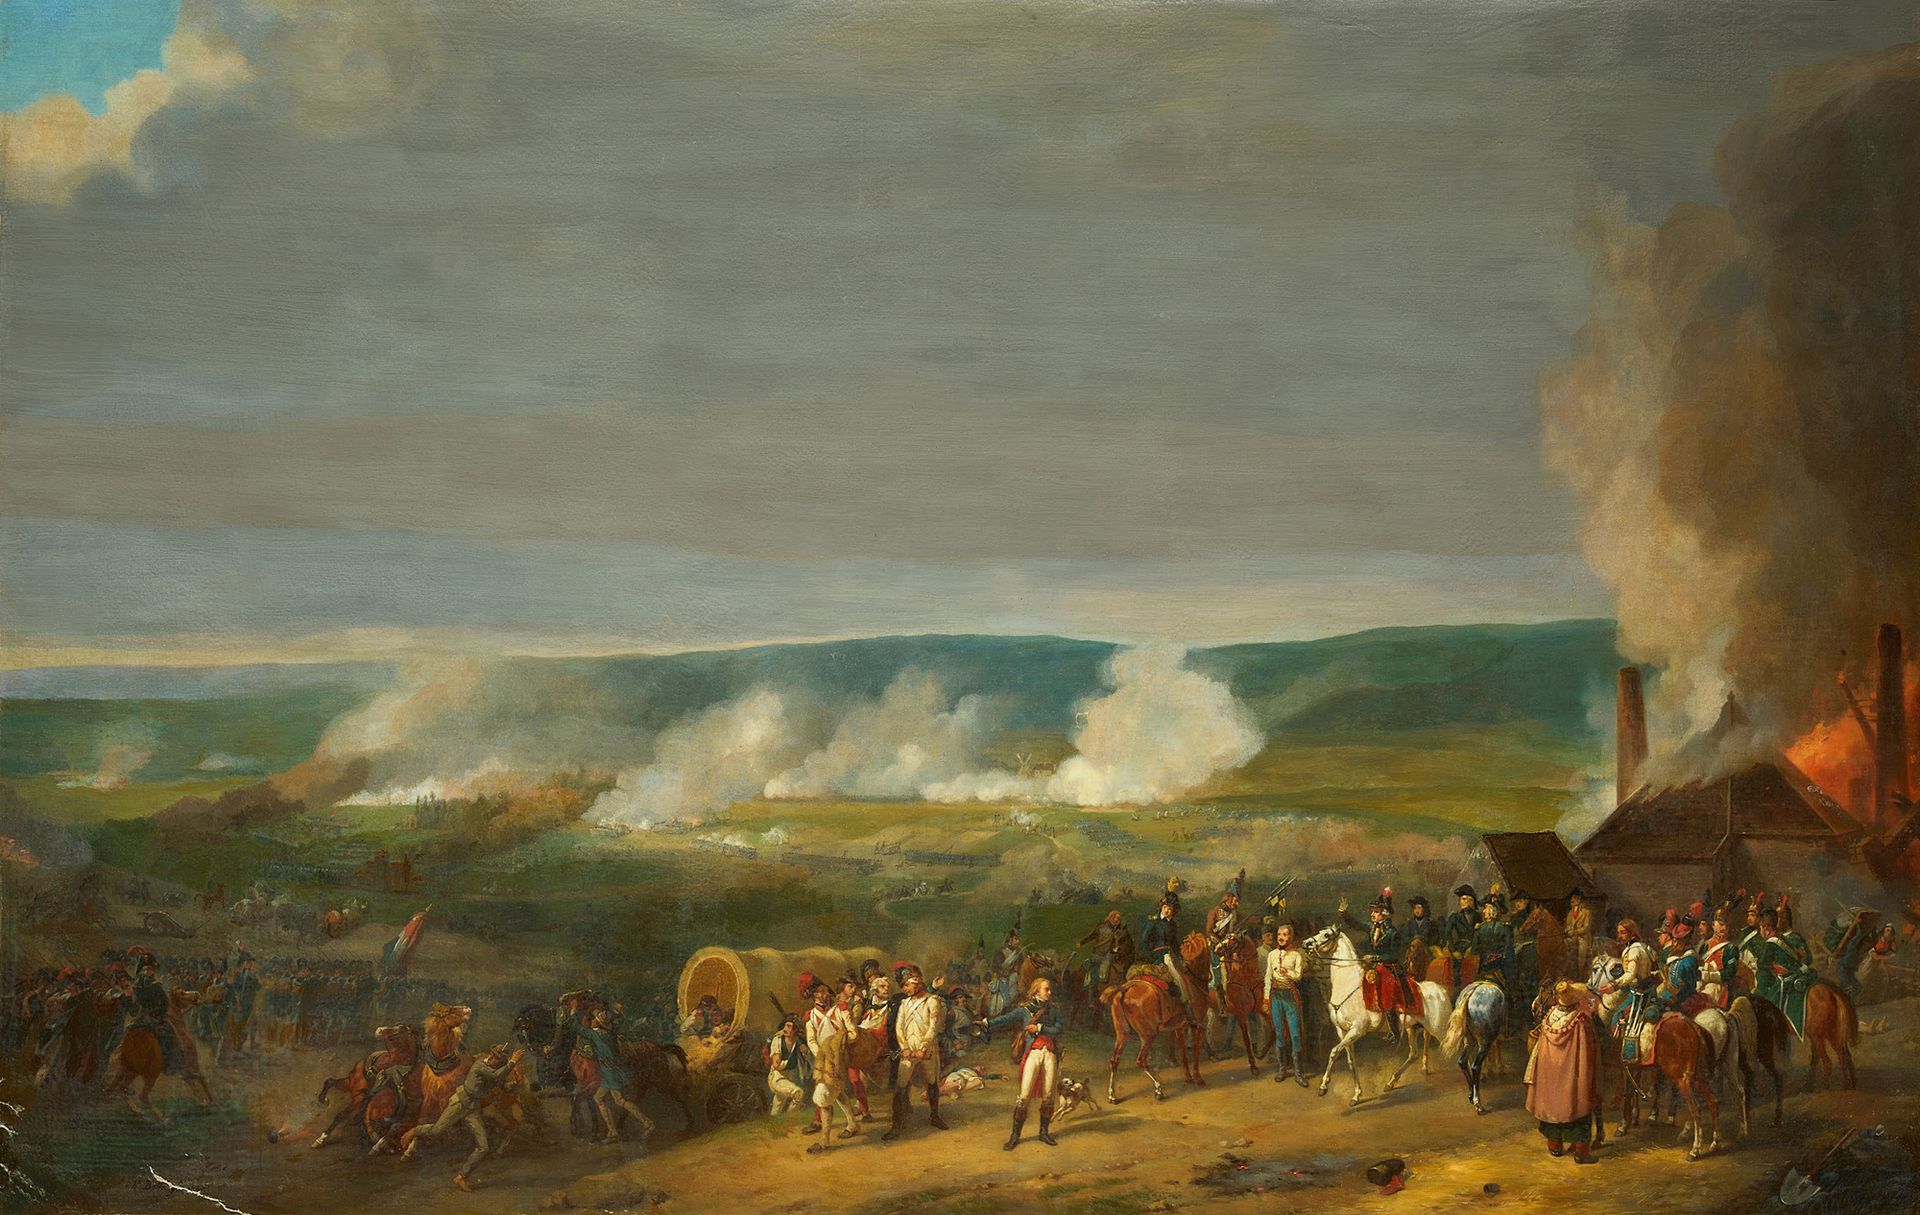 HIPPOLYTE BELLANGÉ PARIS, 1800-1866 Jemmapes之战，仿照Horace Vernet的作品
布面油画
左下角有签名和日期&hellip;